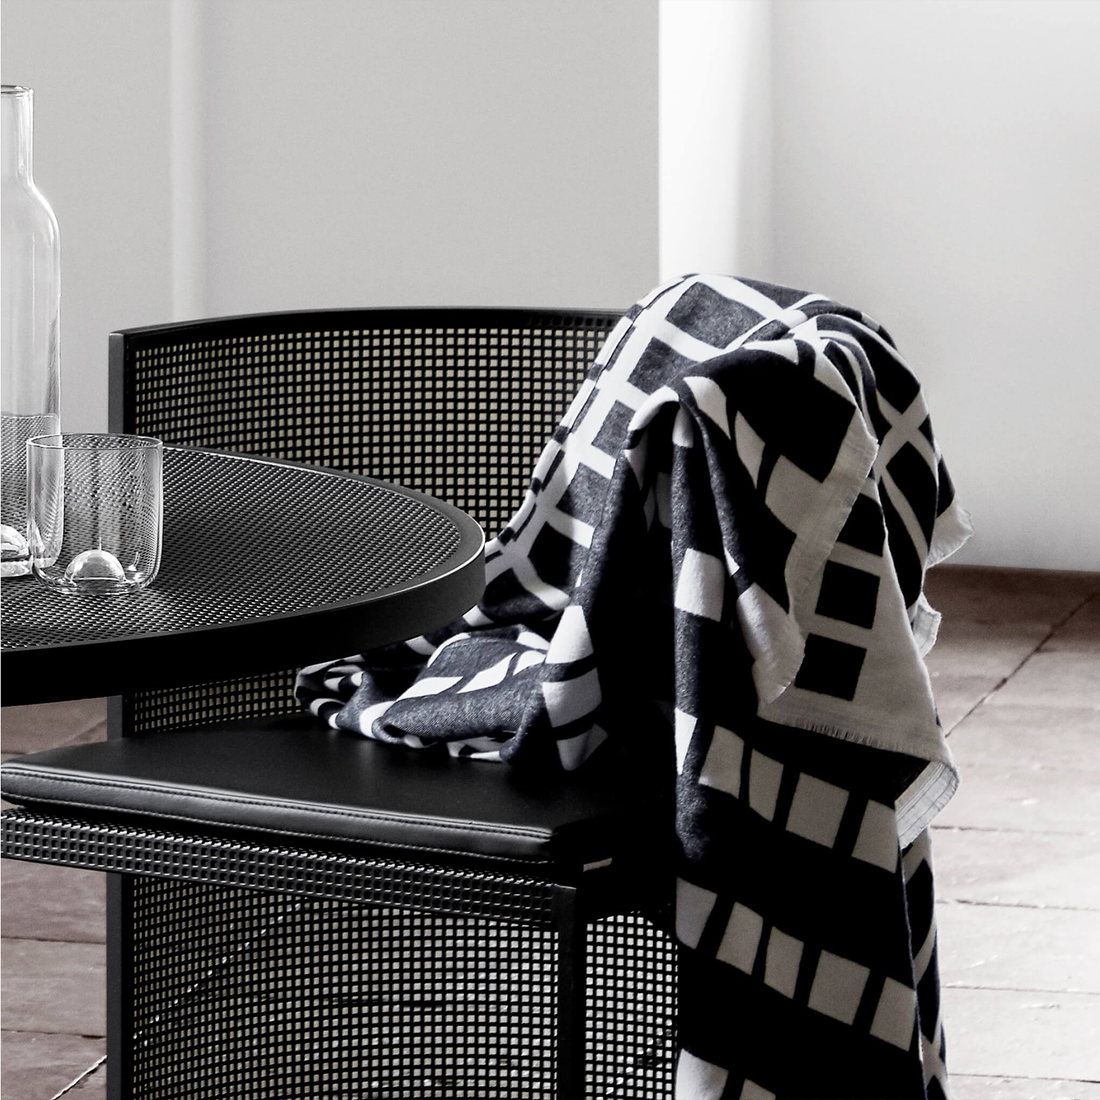 Bauhaus Leather | Dining Chair Cushion